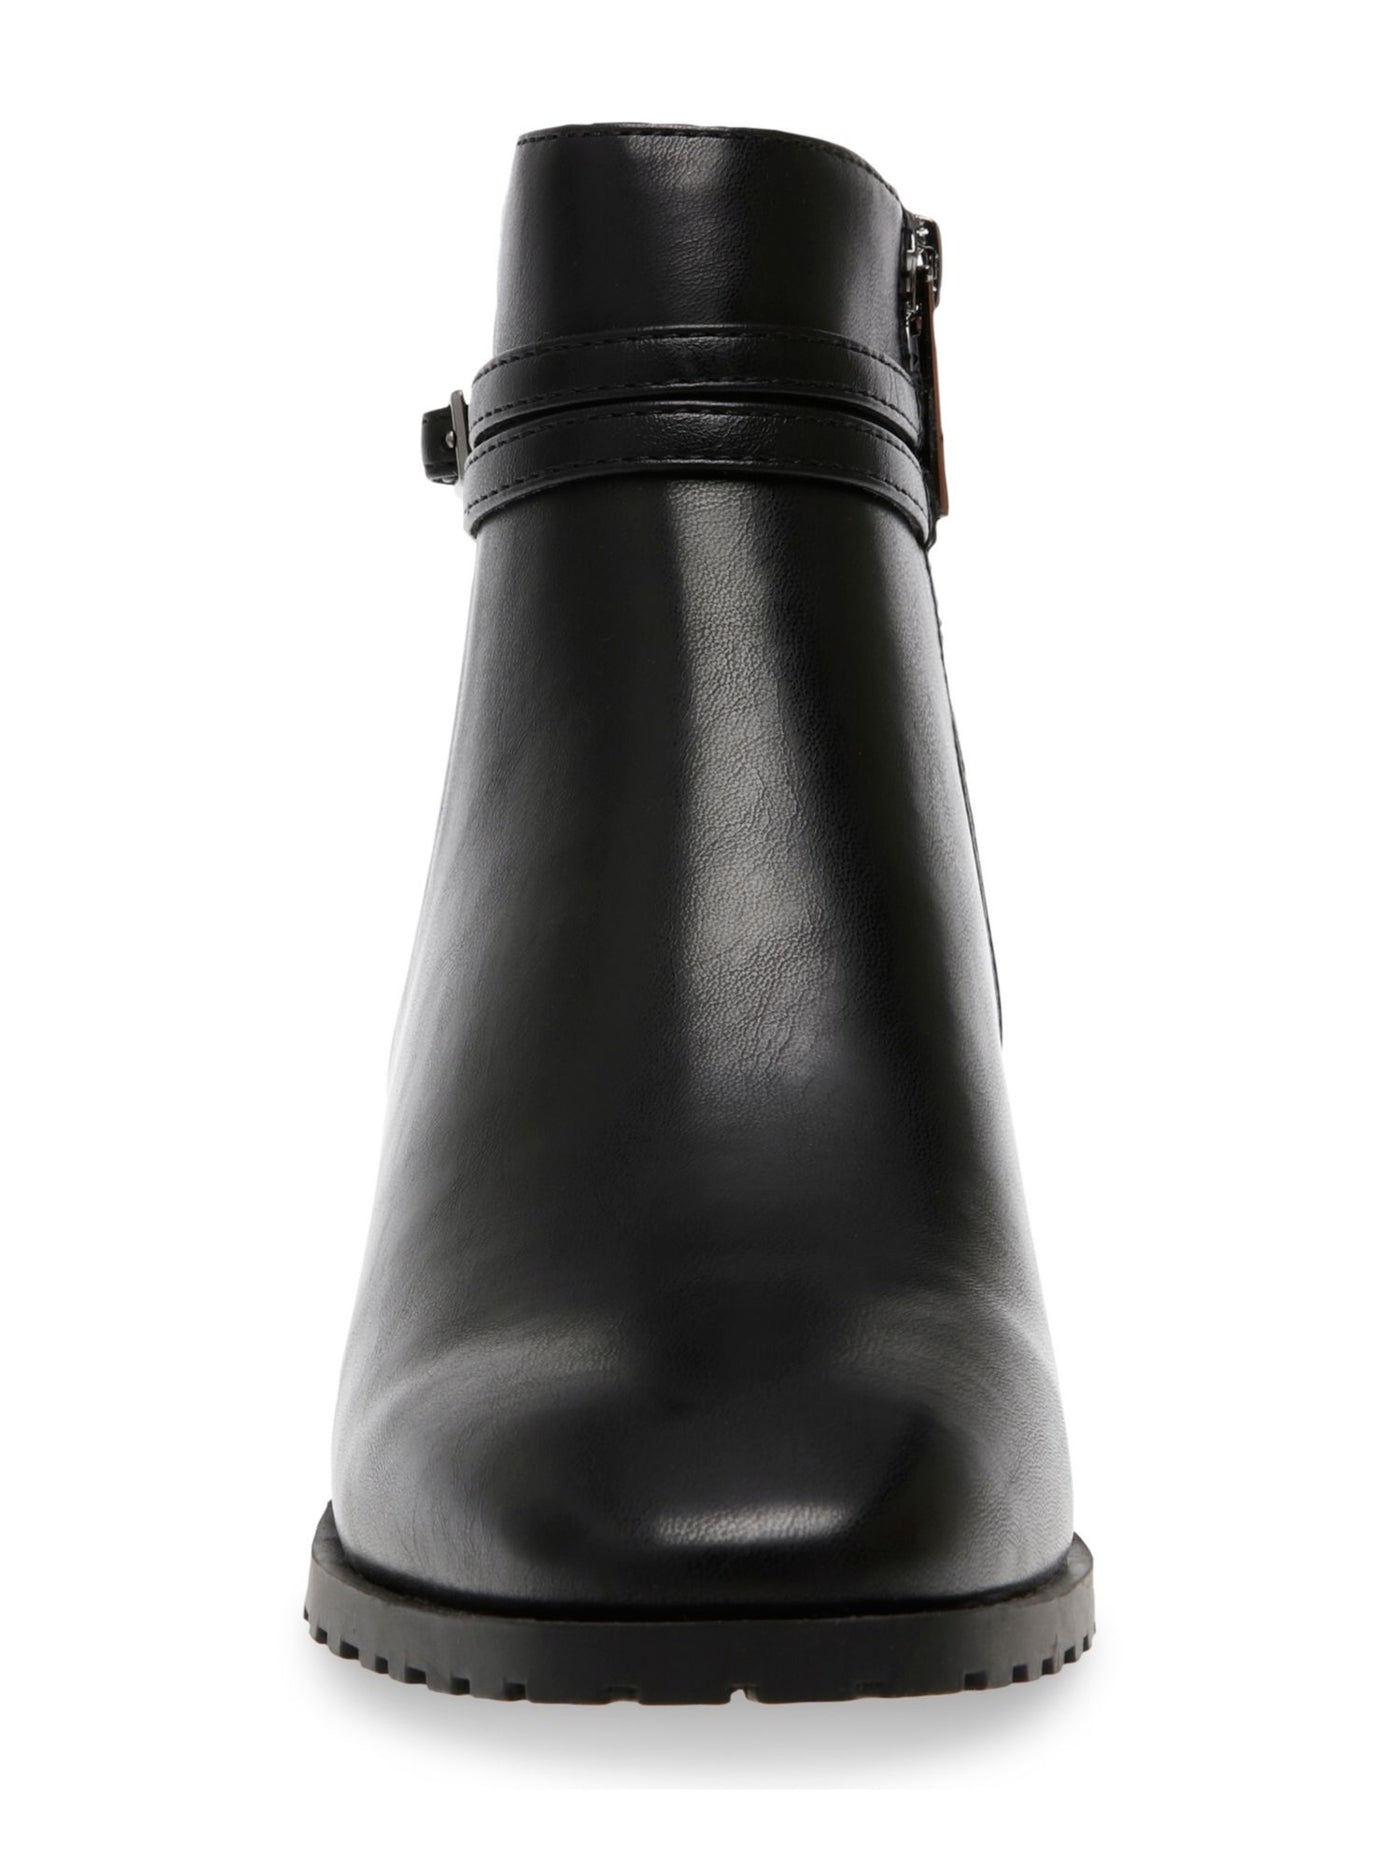 ANNE KLEIN Womens Black Cushioned Cassie Almond Toe Block Heel Buckle Boots Shoes 10 M